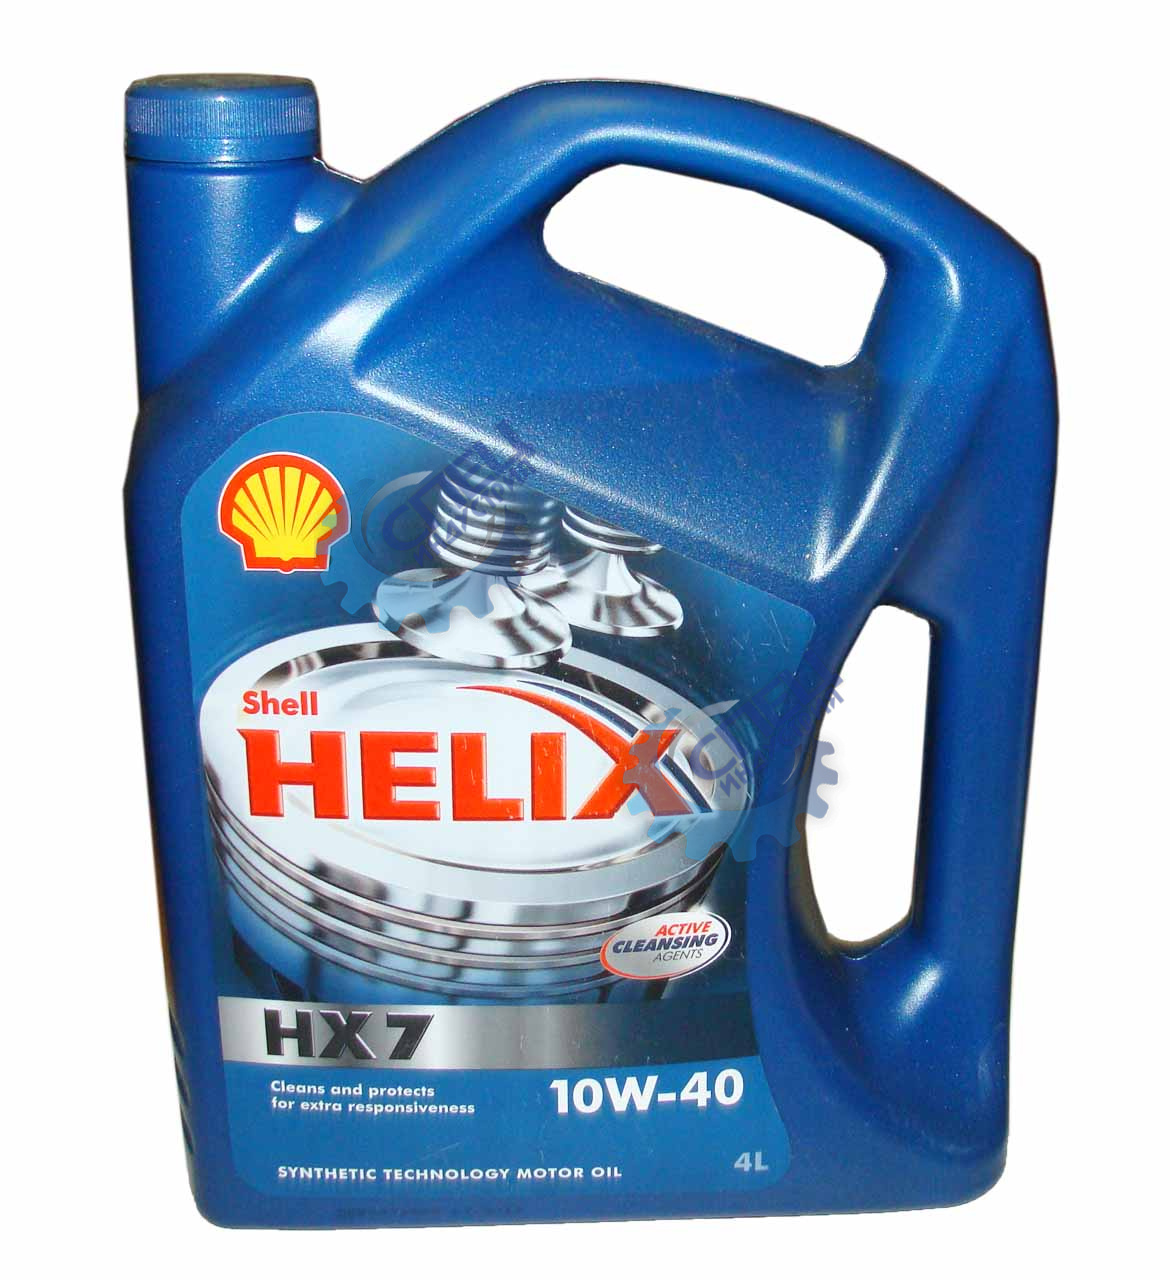 Масло hx7 5w40. Shell hx7 Diesel. Shell HX 7 10w 40 Active Cleansing. Shell Helix HX 7 Diesel 10 40. Shell Helix 10w 40 Diesel.